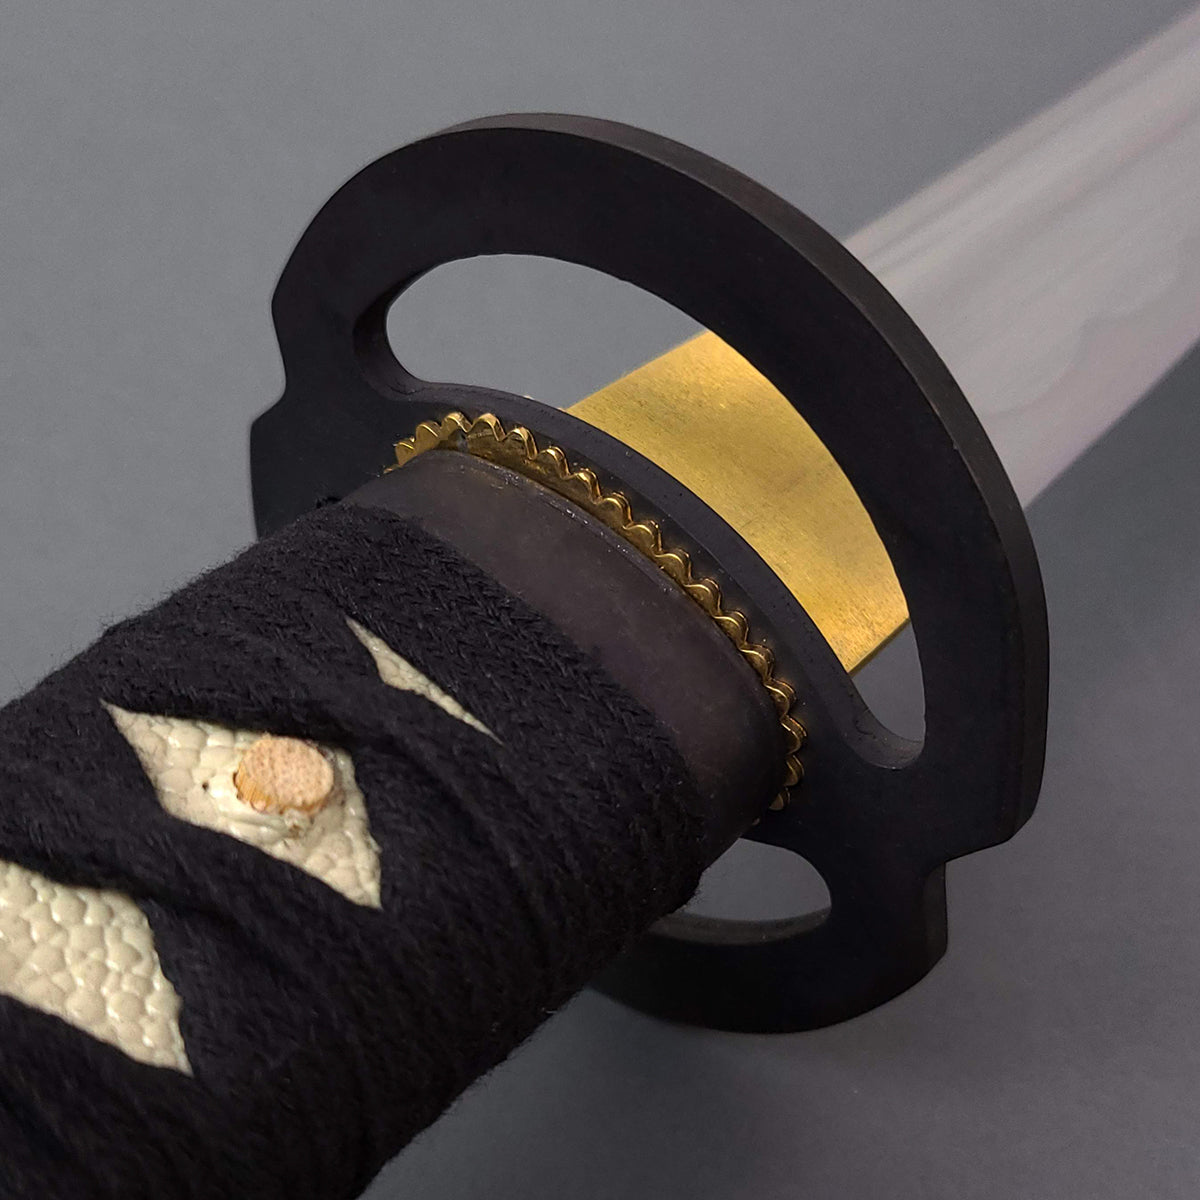 Musha Five Rings Katana - Authentic Samurai Sword for Sale.